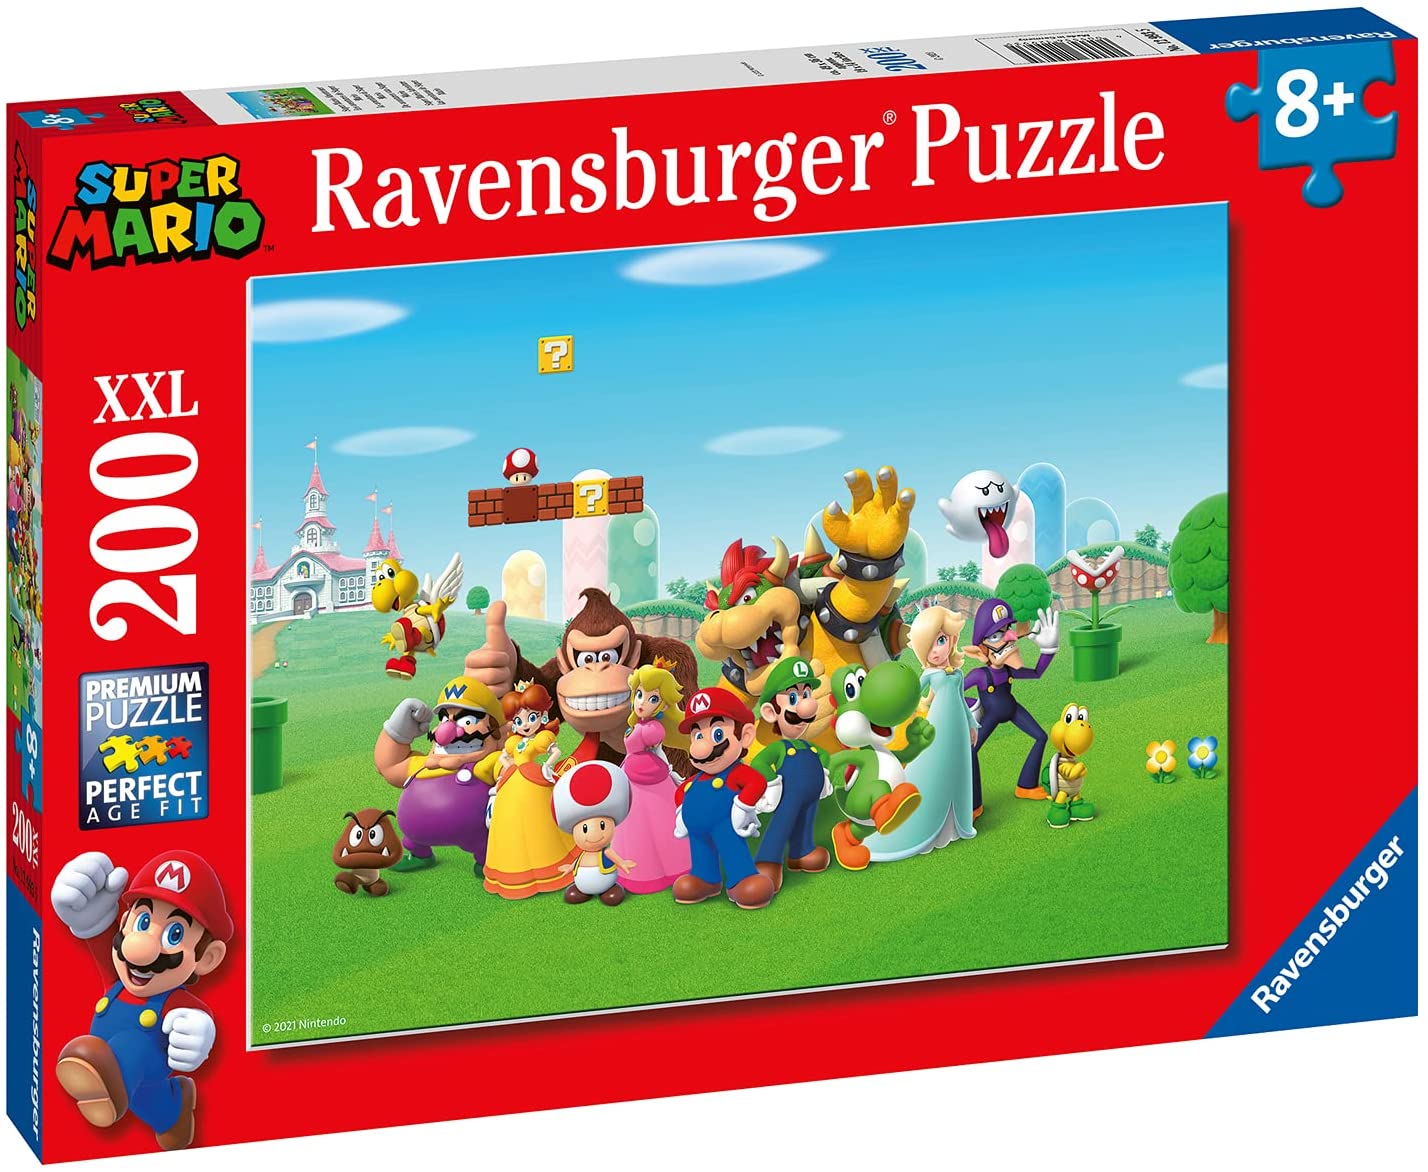 Ravensburger Super Mario XXL 200 piece Jigsaw Puzzle Ravensburger